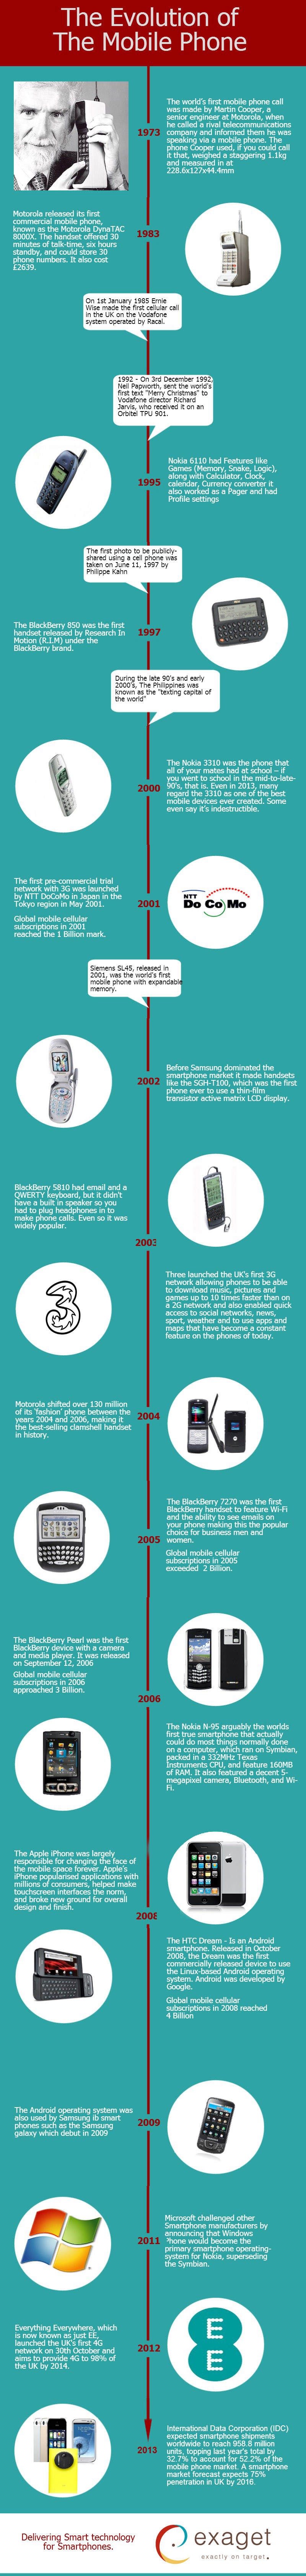 Mobile phone evolution infographic